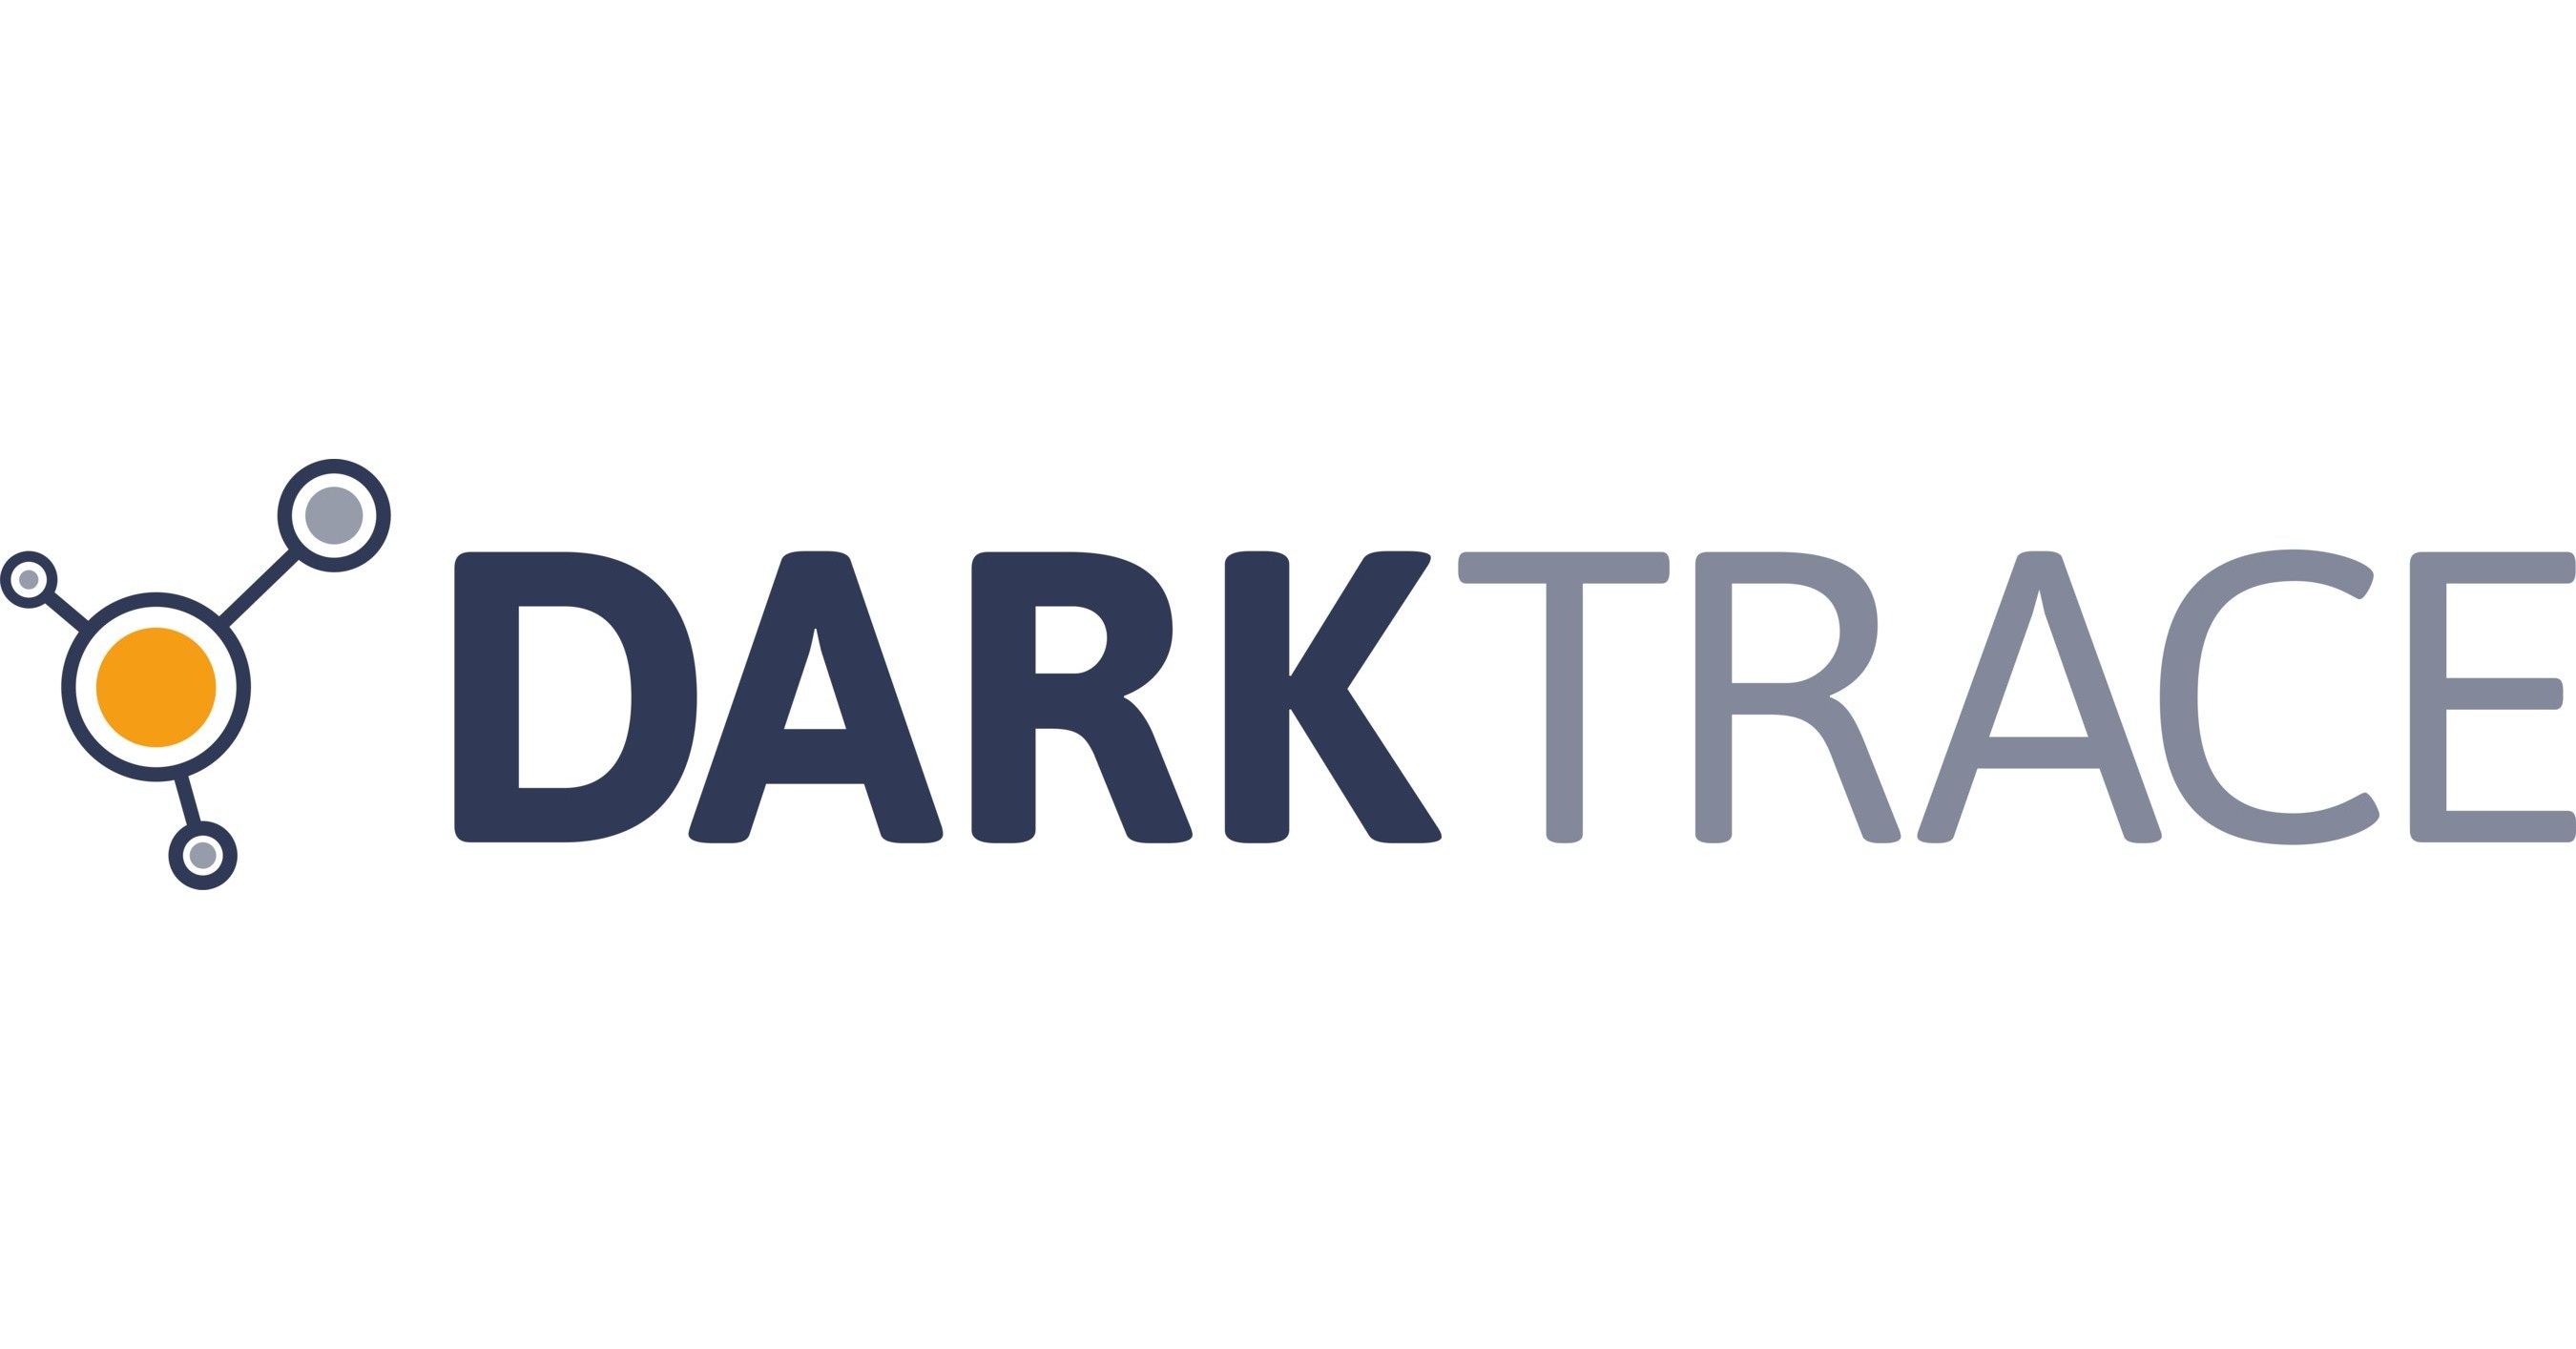 Darktrace Plc